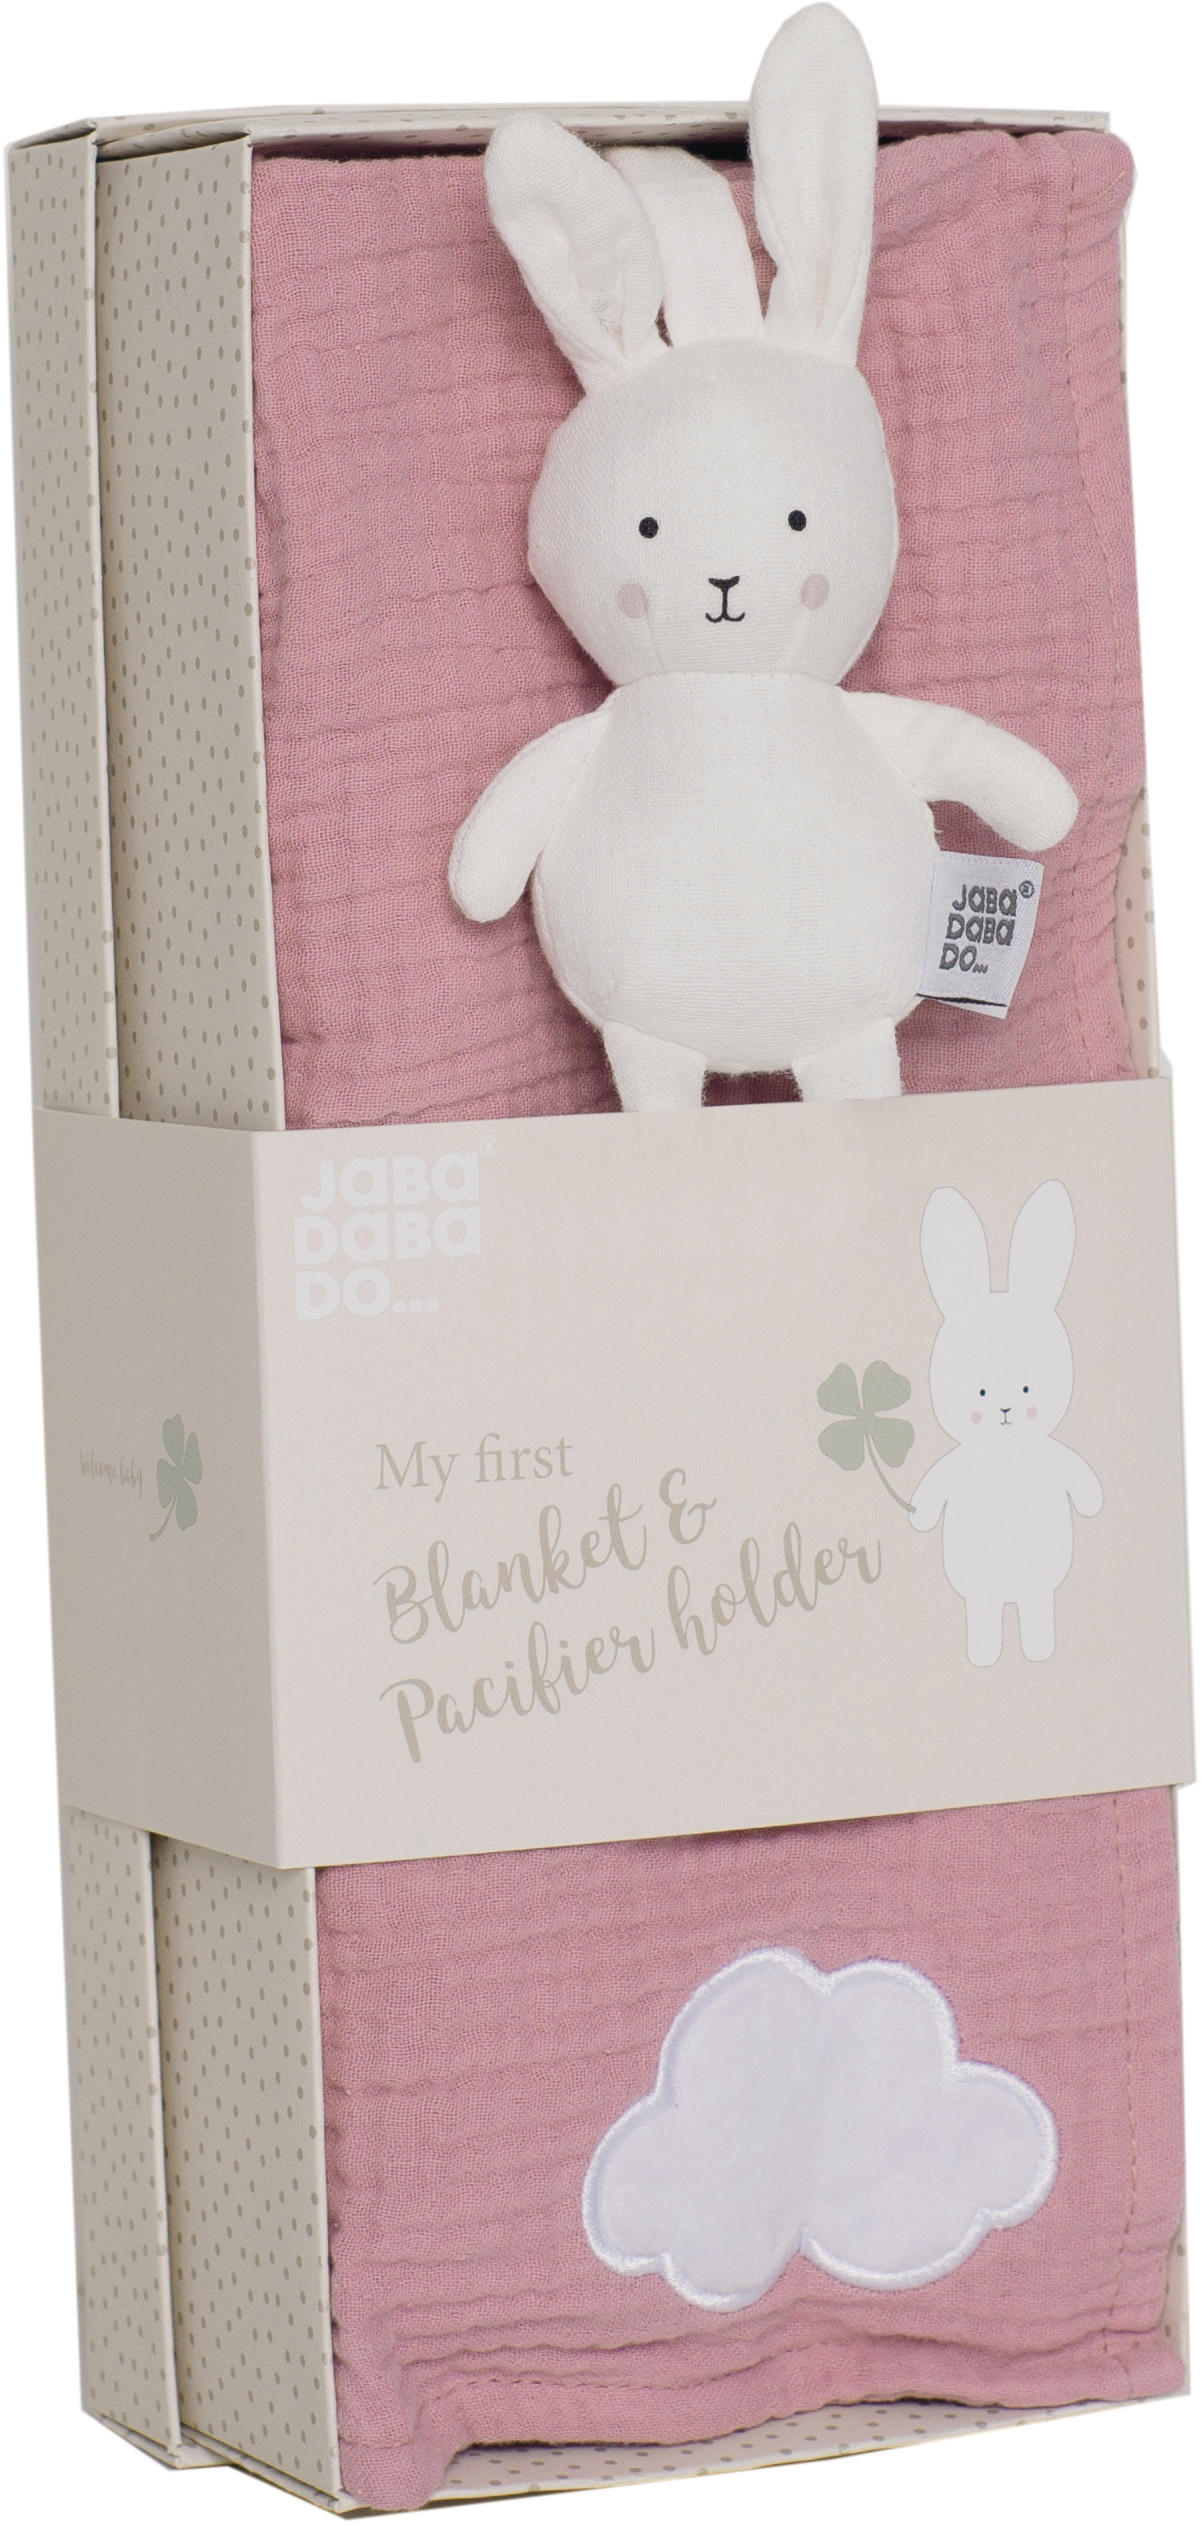 JABADABADO Gift kit buddy bunny N0181 pink, blanket, pacifier pink, blanket, pacifier